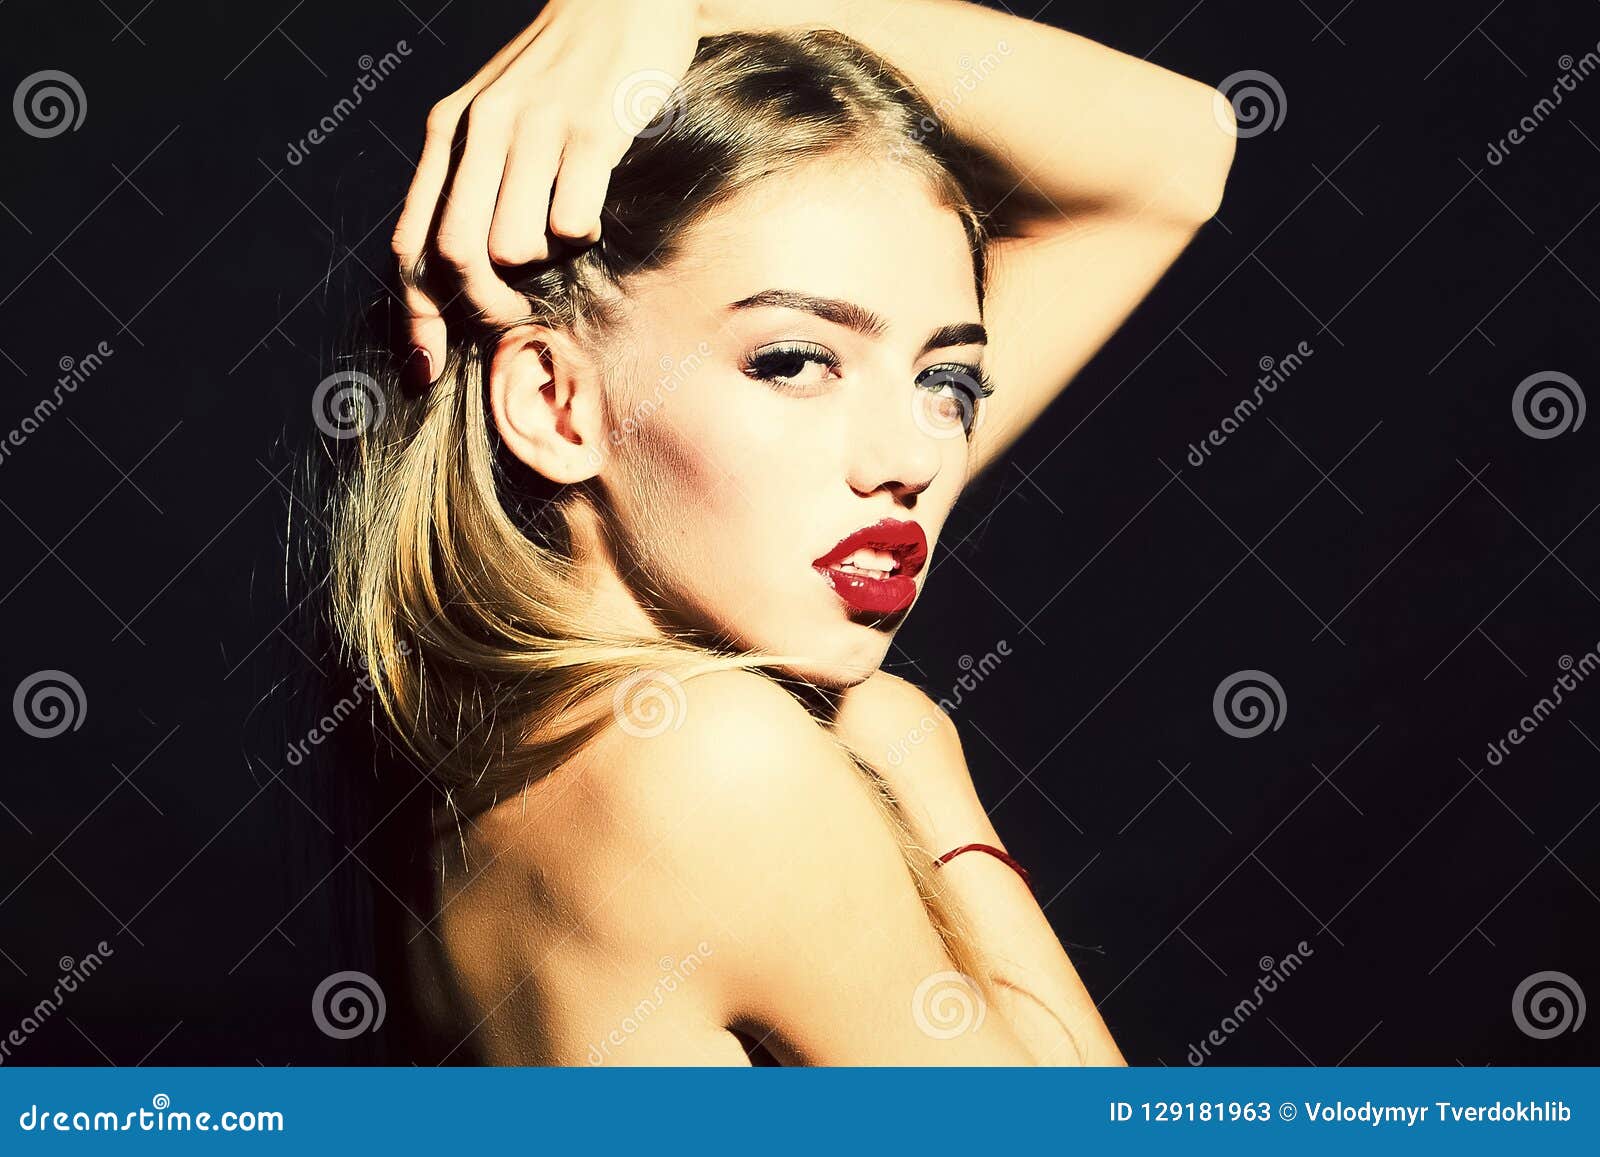 Undressed woman in studio stock image